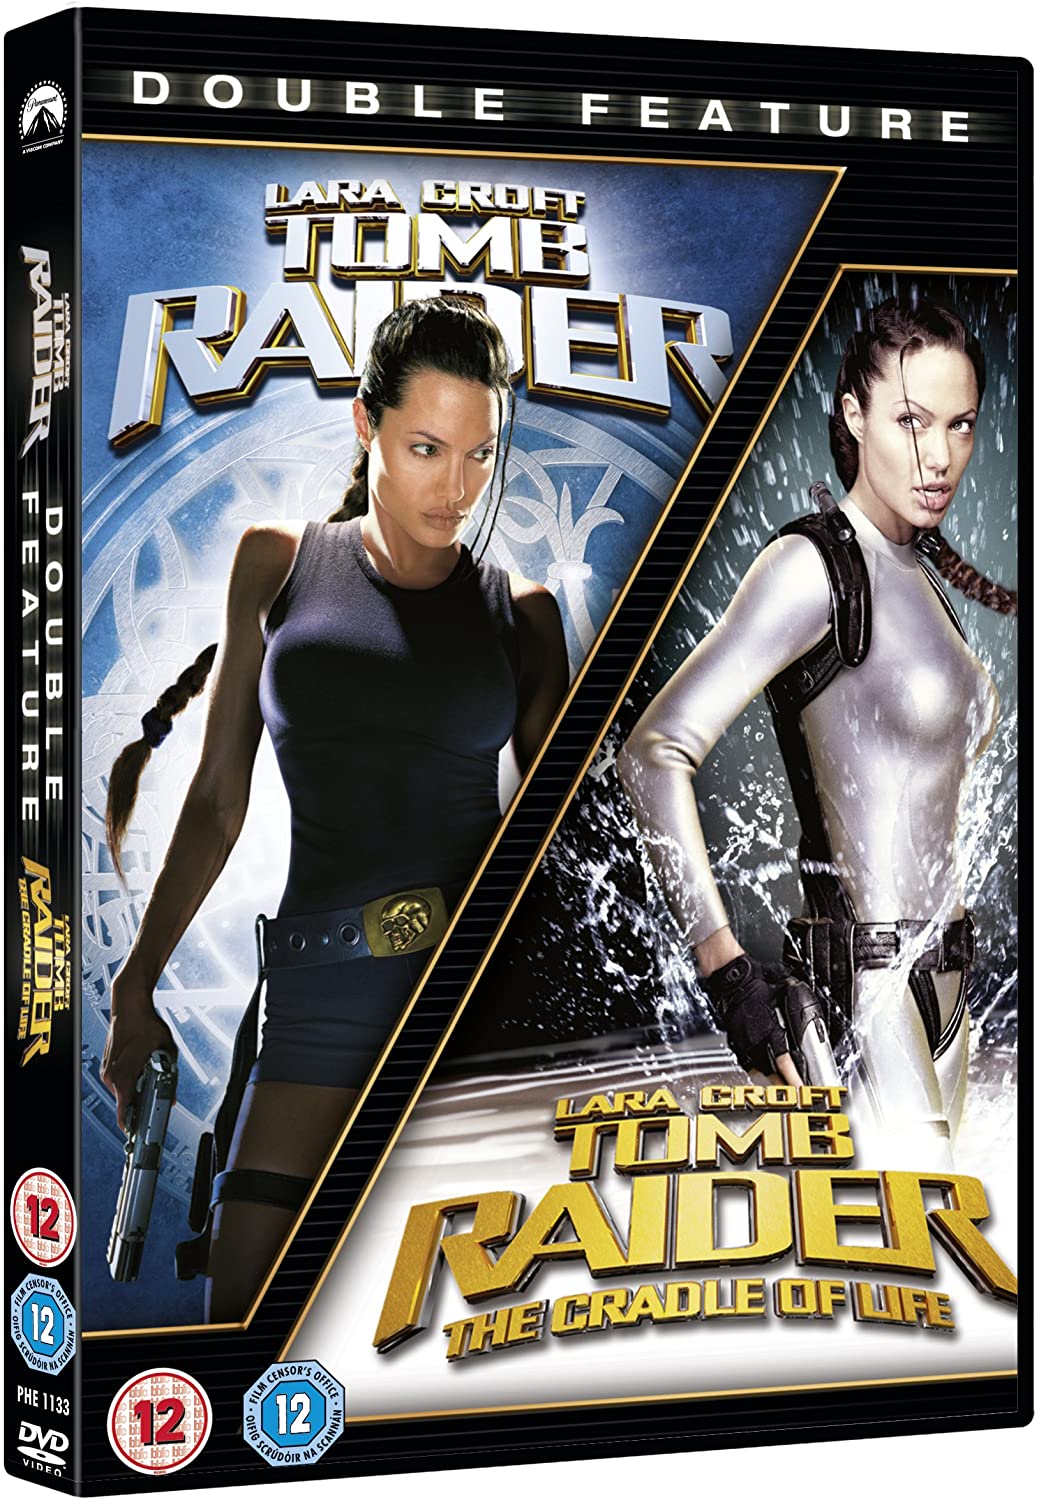 Lara Croft - Tomb Raider: 2-Movie Collection - Action/Adventure [DVD]